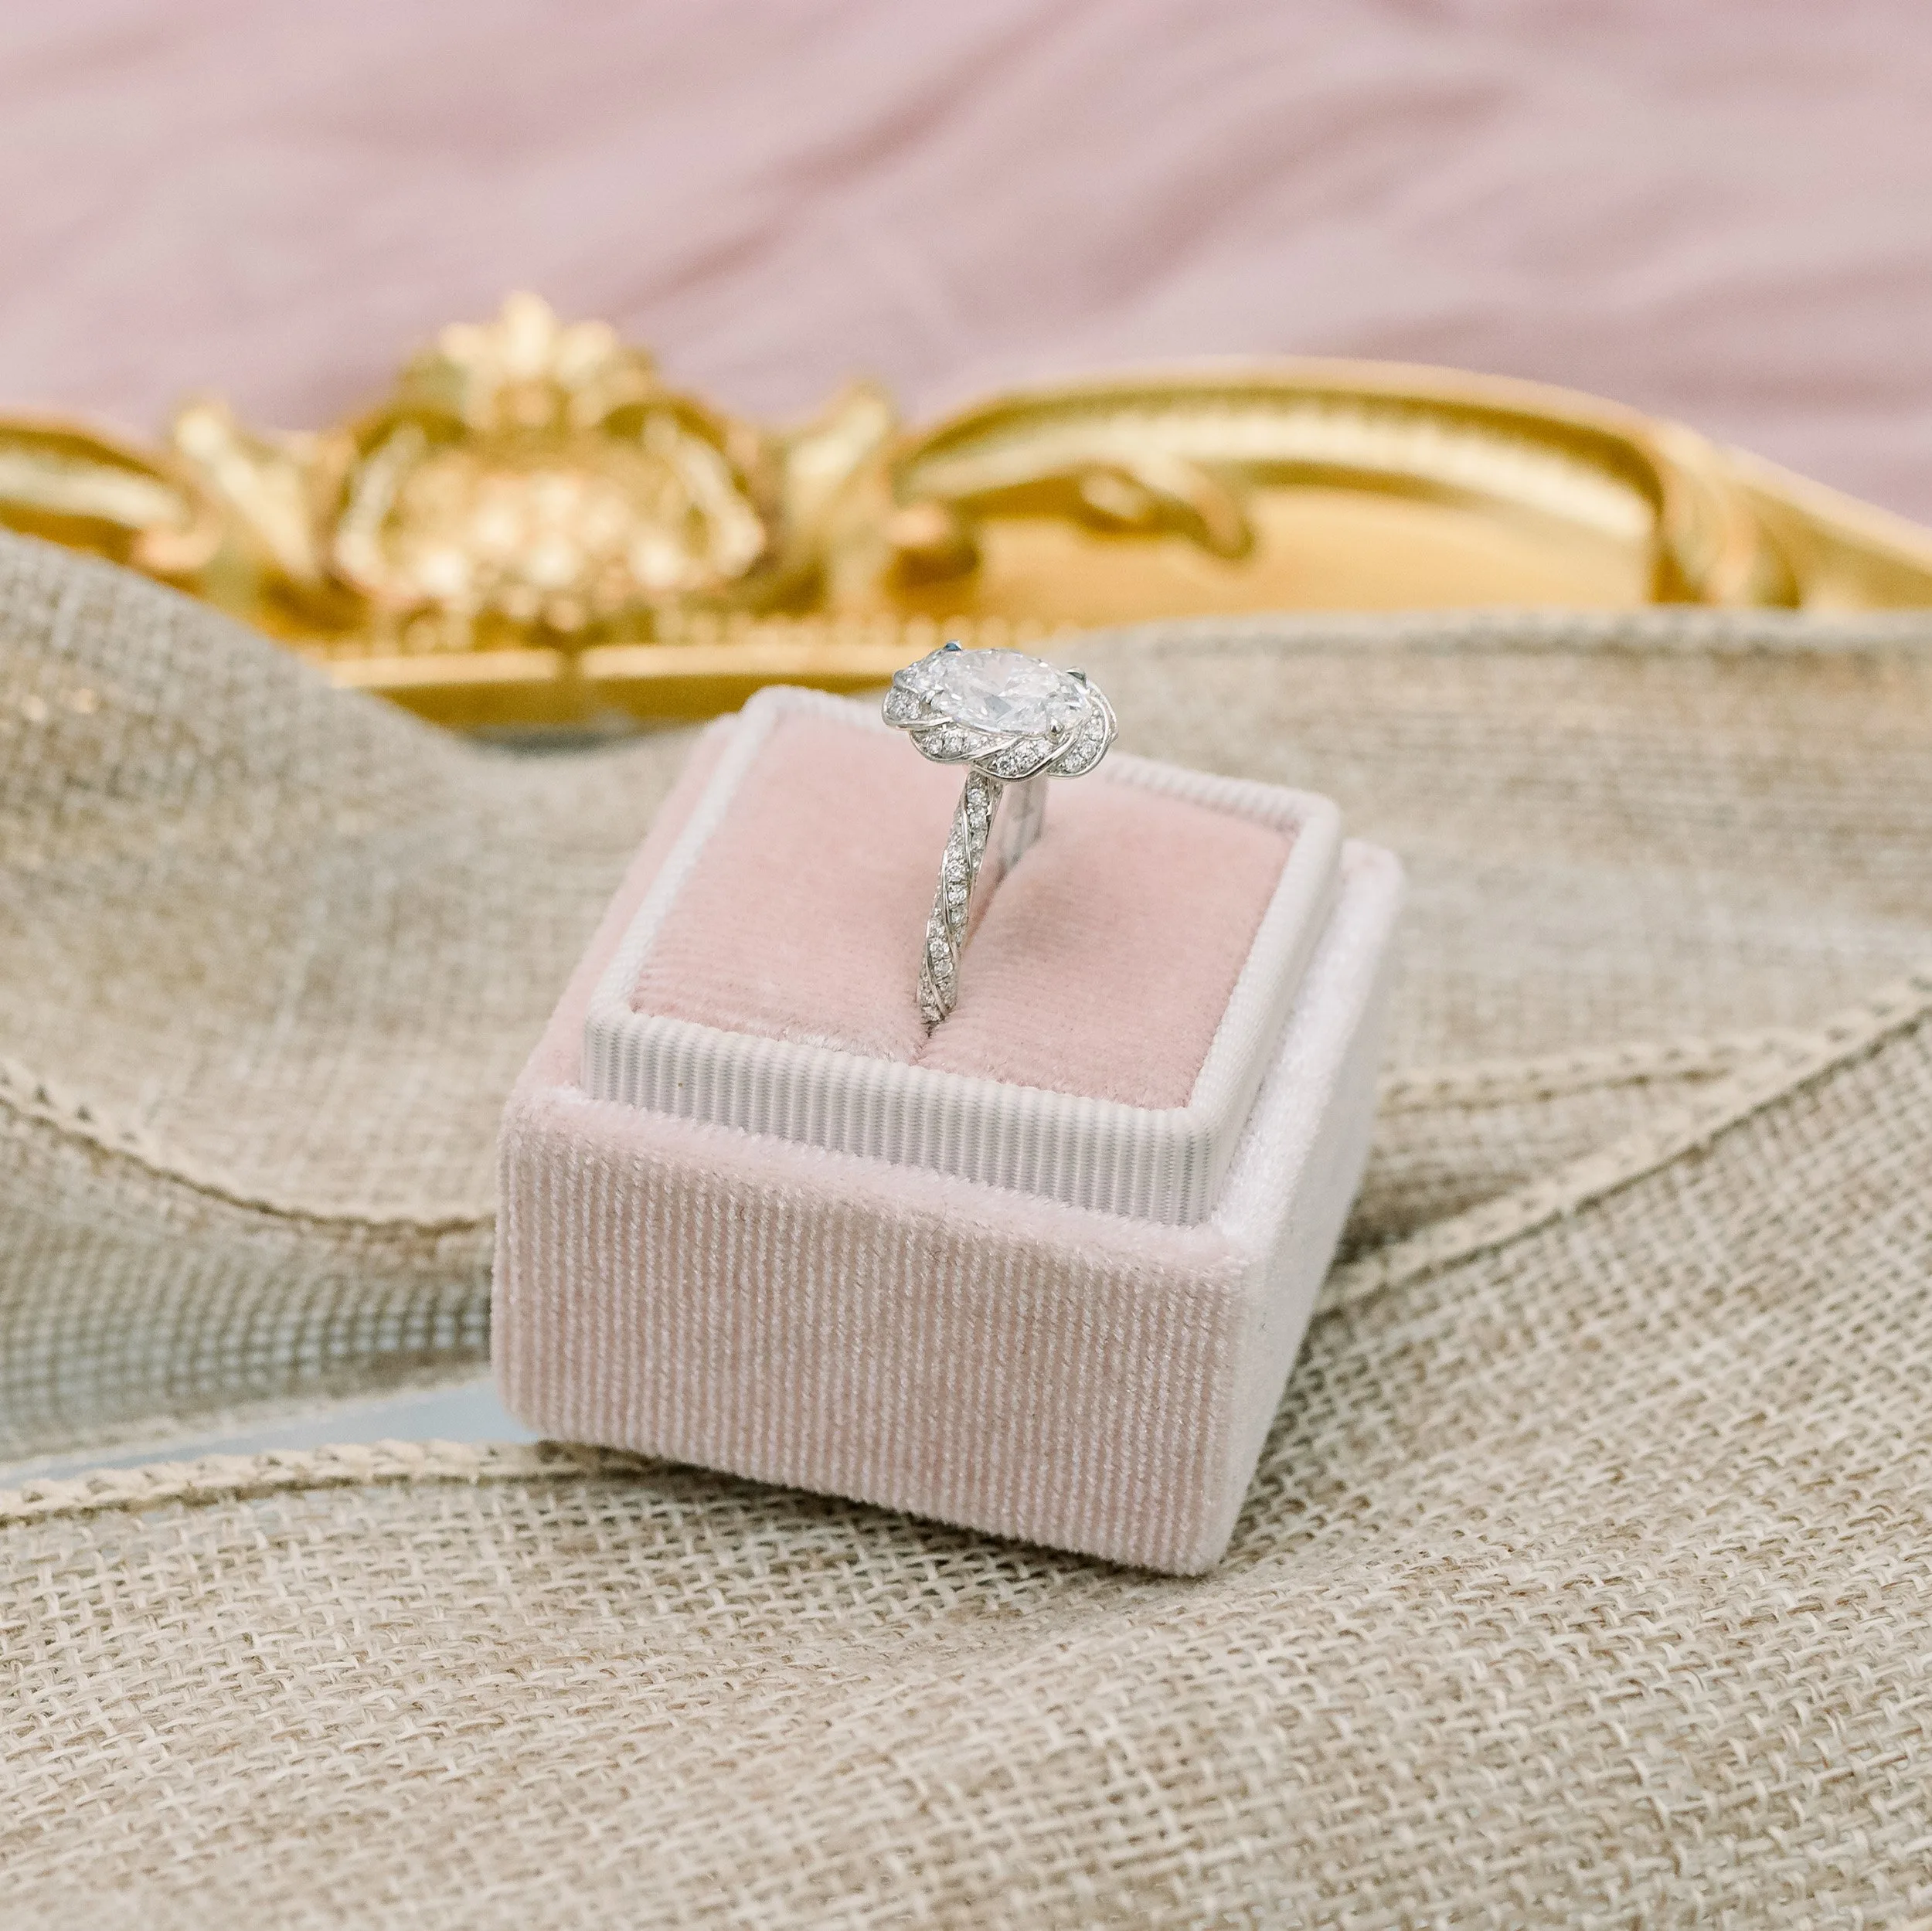 18k white gold 1.25 ct oval lab diamond in custom setting with twisting halo and twisting diamond band ada diamonds design ad 179 profile